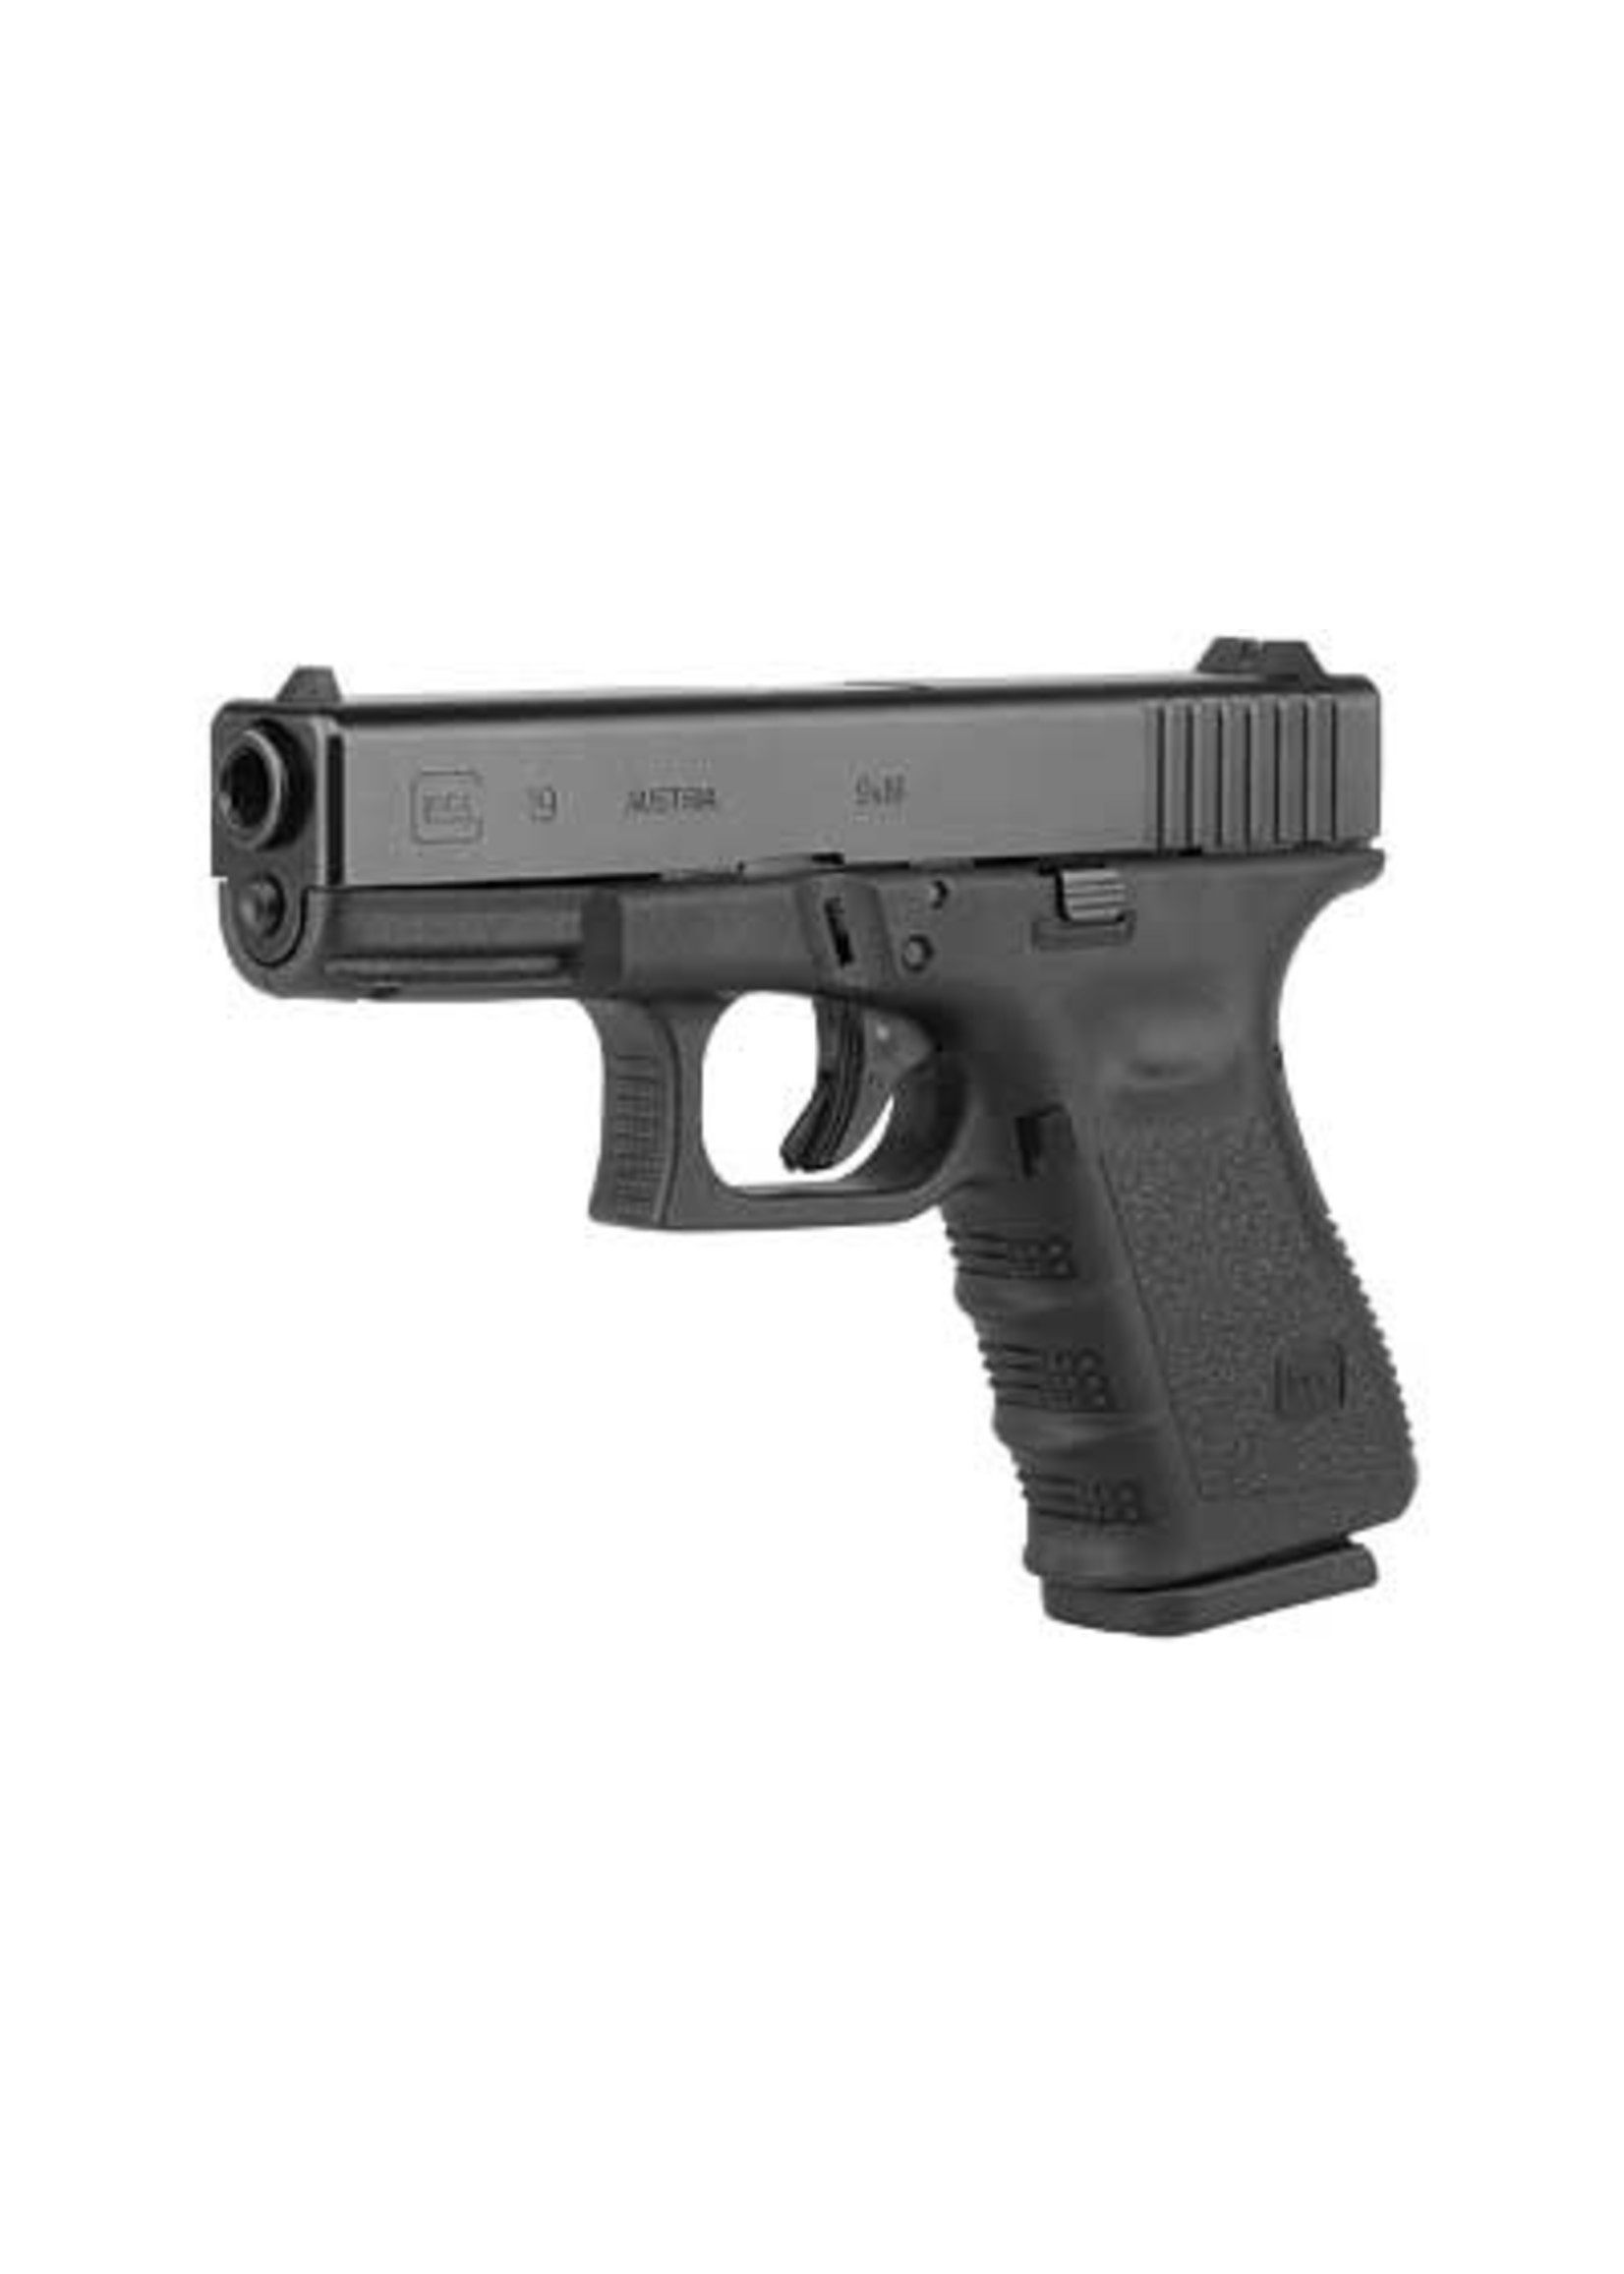 Glock Glock, 19 Gen3, Striker Fired, Semi-automatic, Polymer Frame Pistol, Compact, 9MM, 4.02" Barrel, Matte Finish, Black, Fixed Sights, 15 Rounds, 2 Magazines